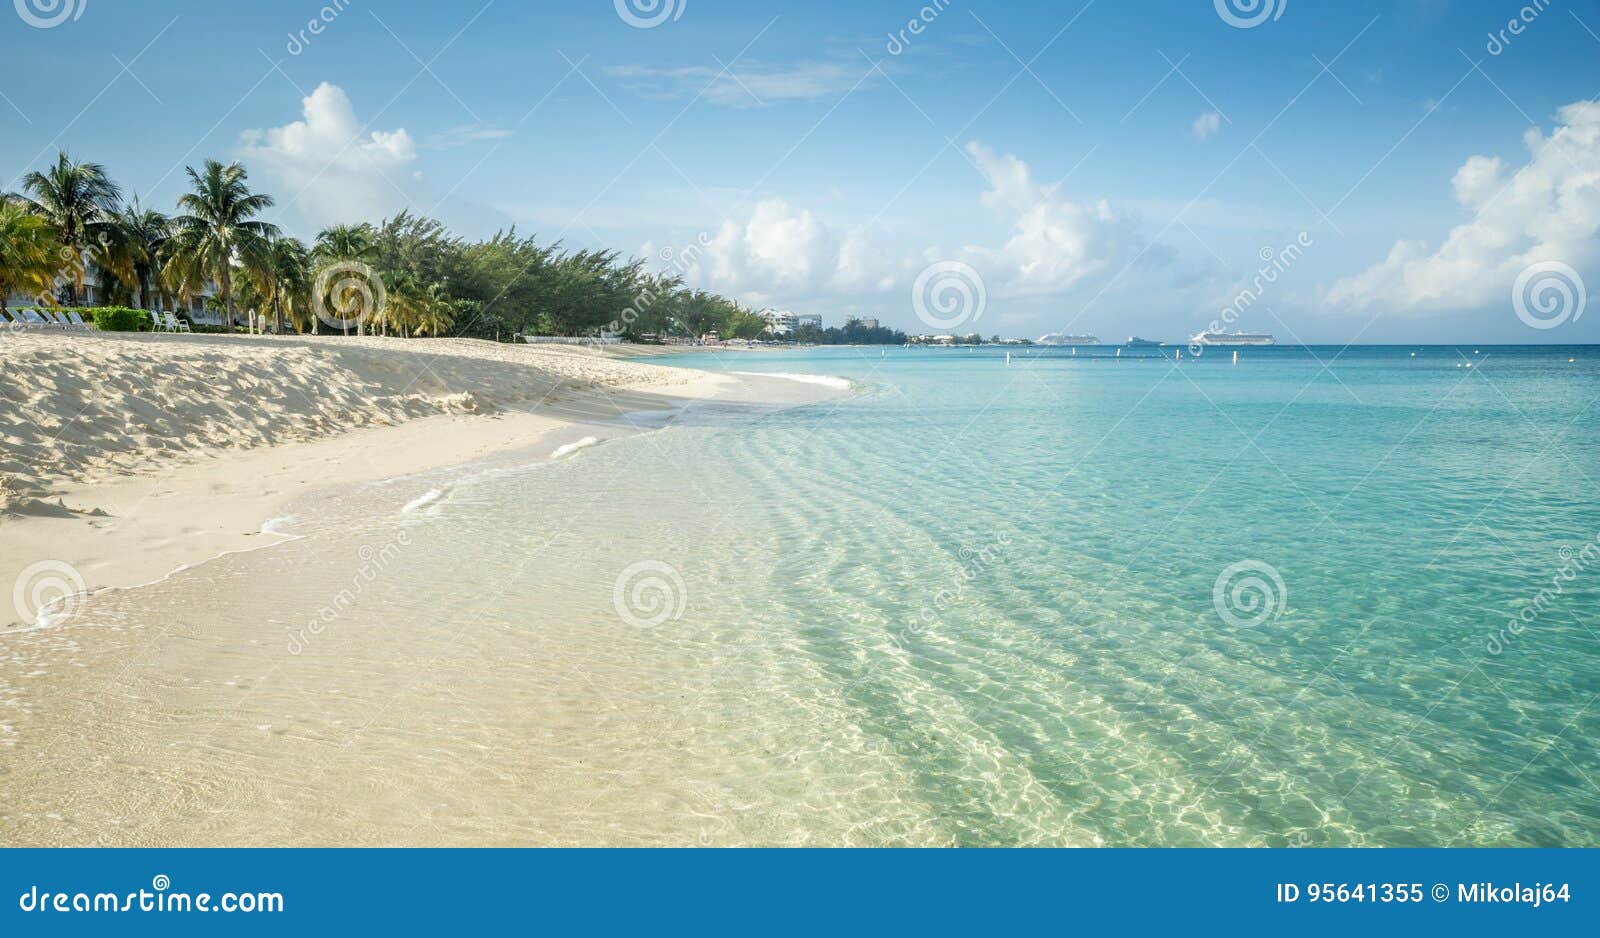 seven mile beach on grand cayman island